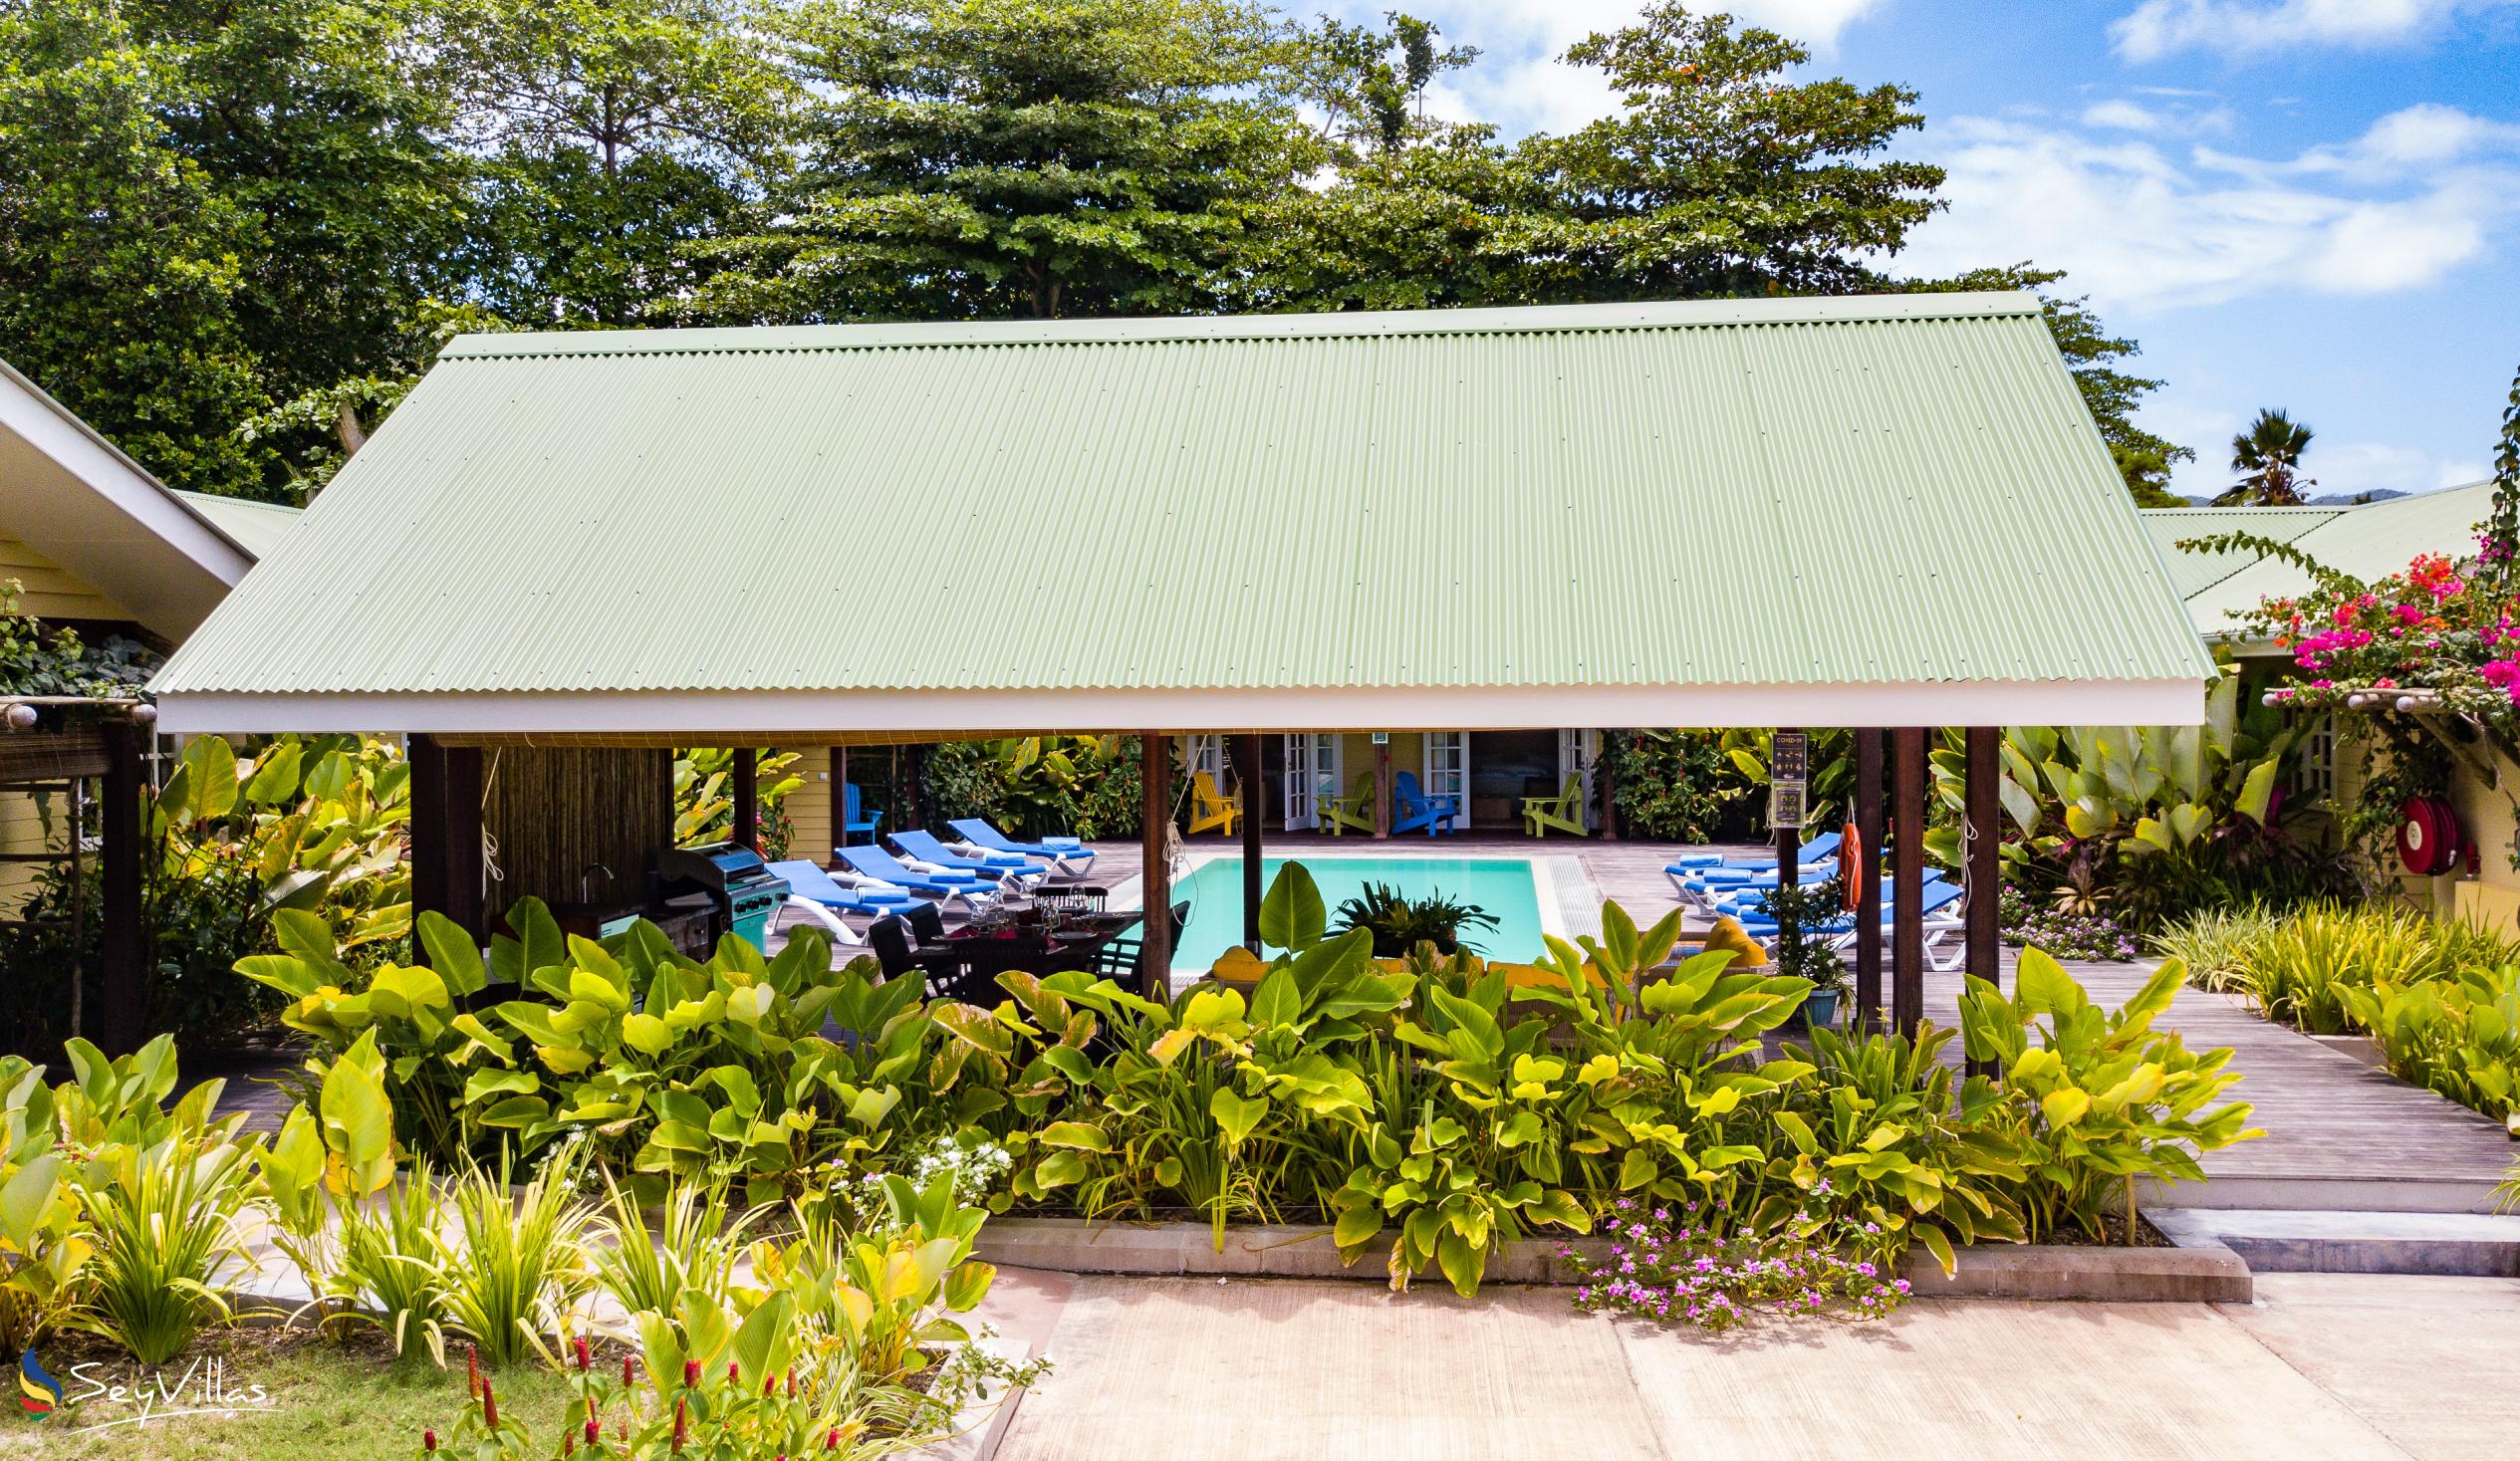 Photo 21: Residence Praslinoise - Outdoor area - Praslin (Seychelles)